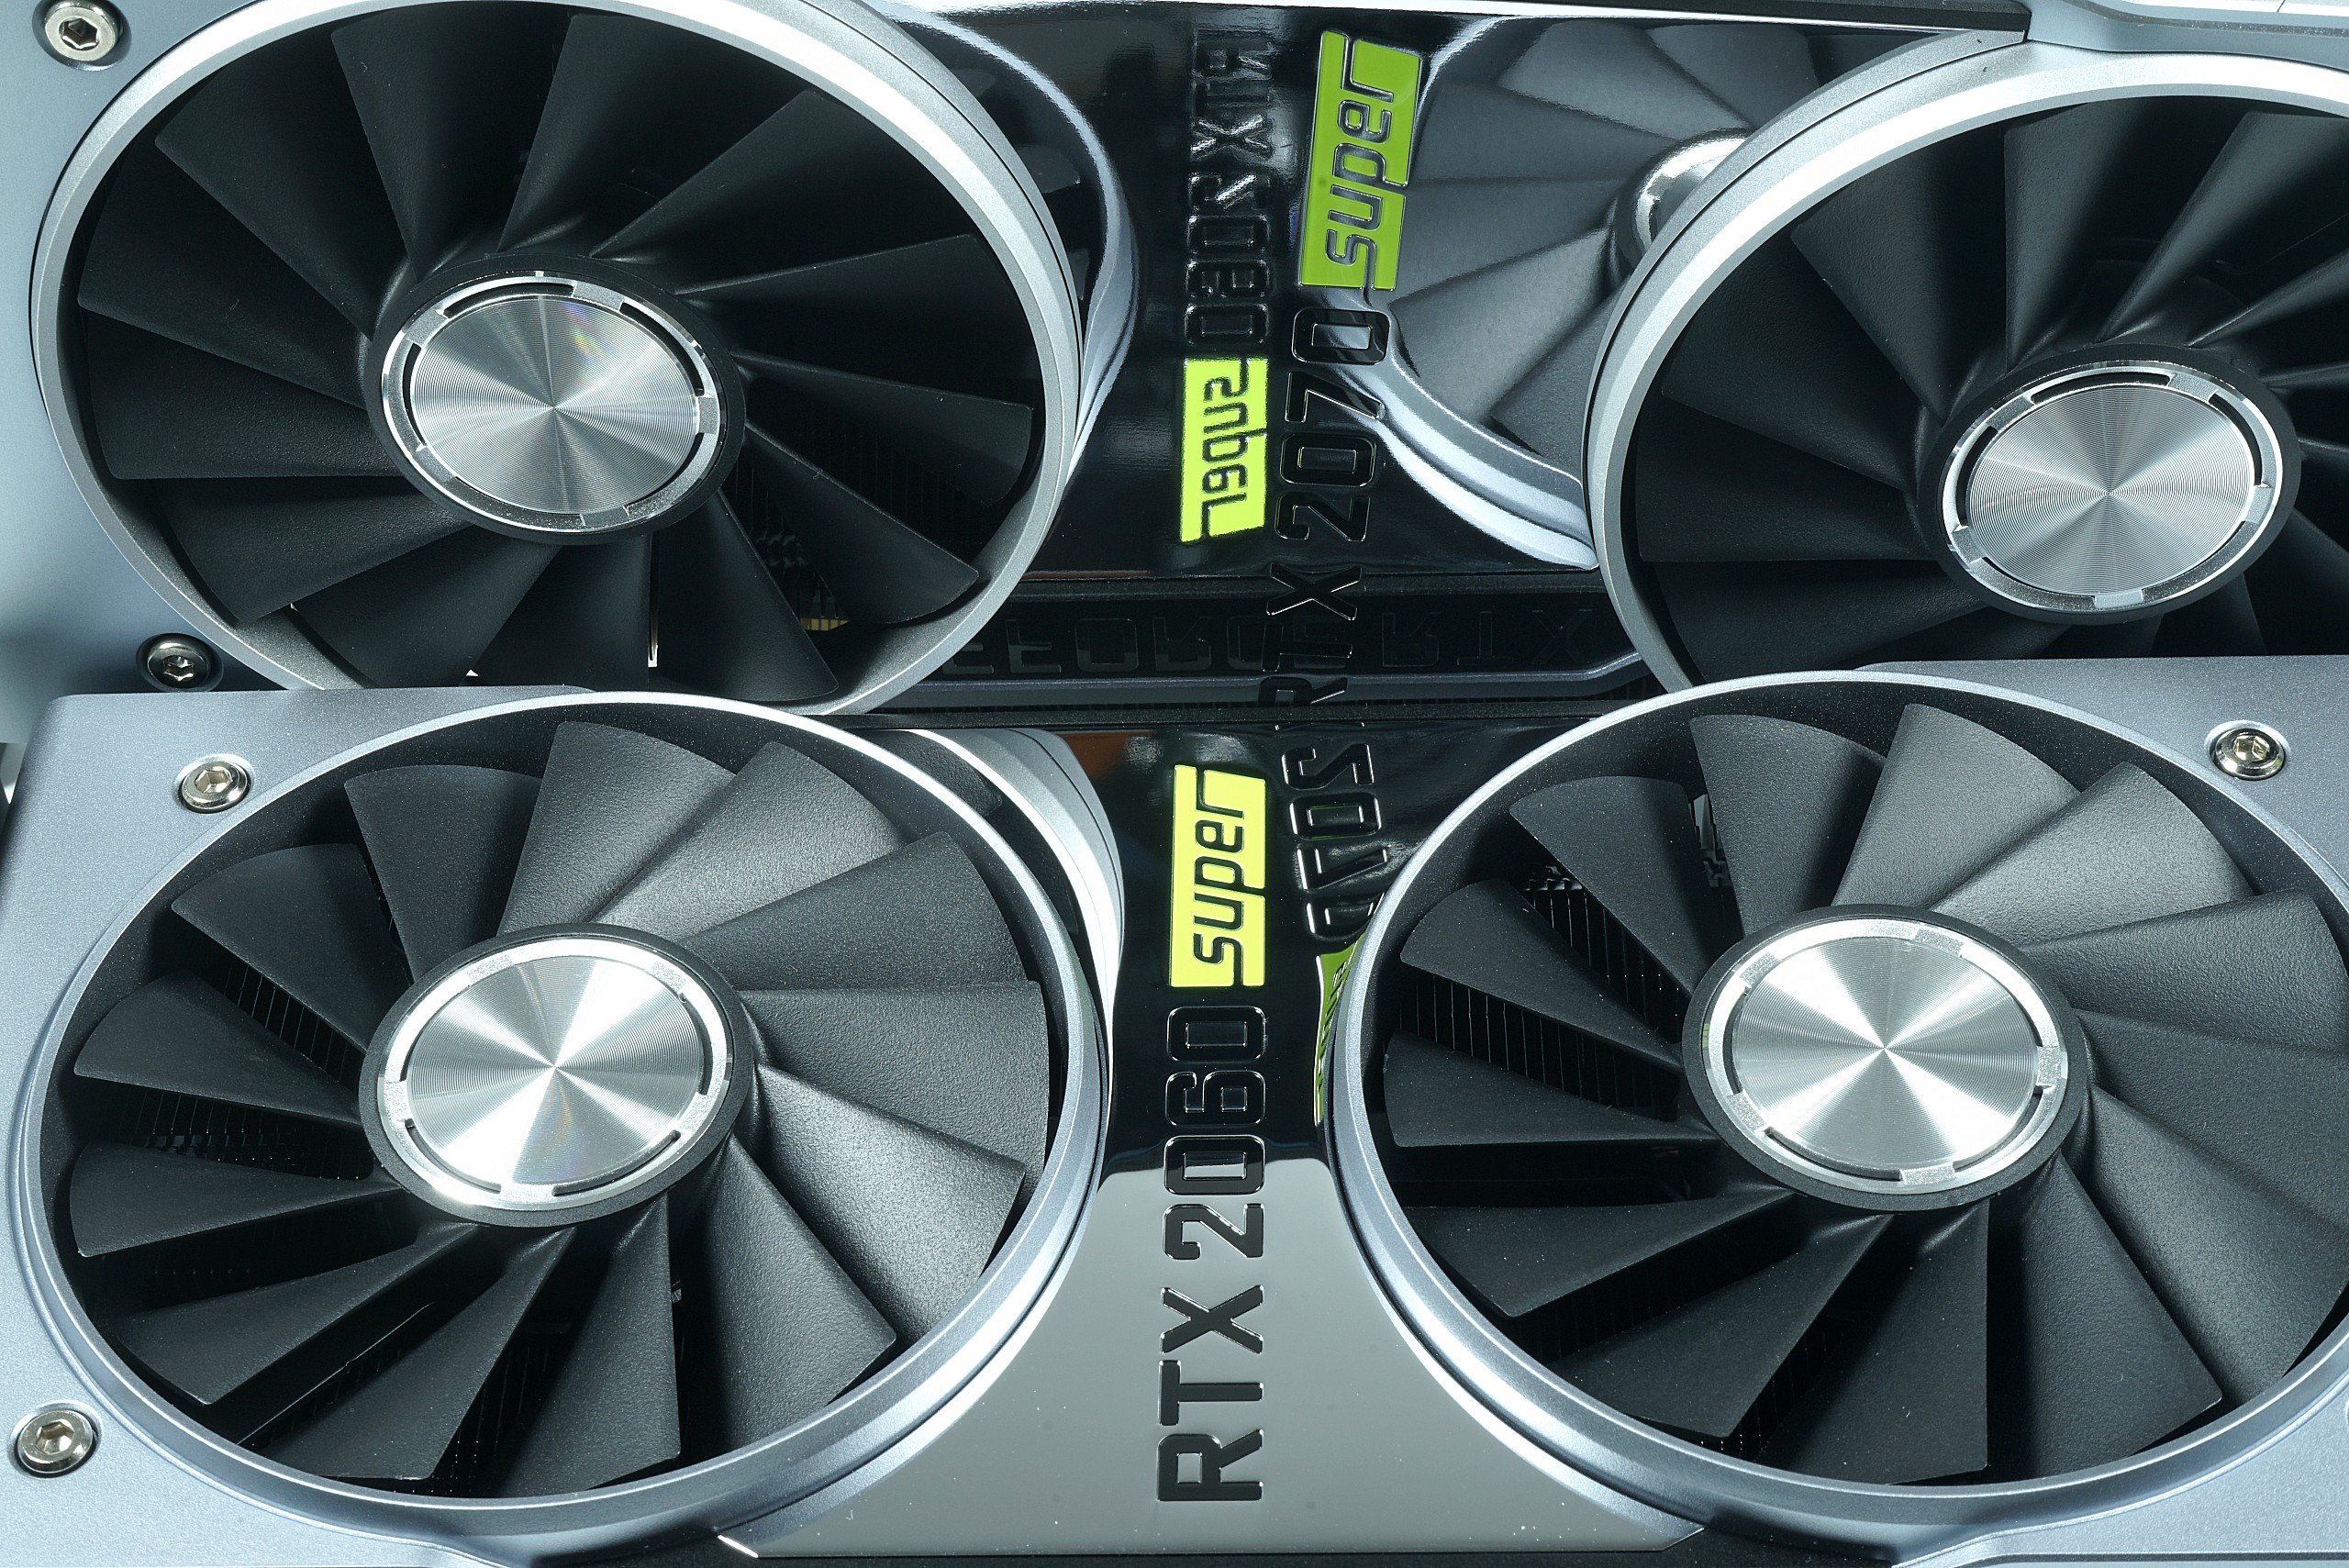 Should I buy an Nvidia GeForce RTX 2060?